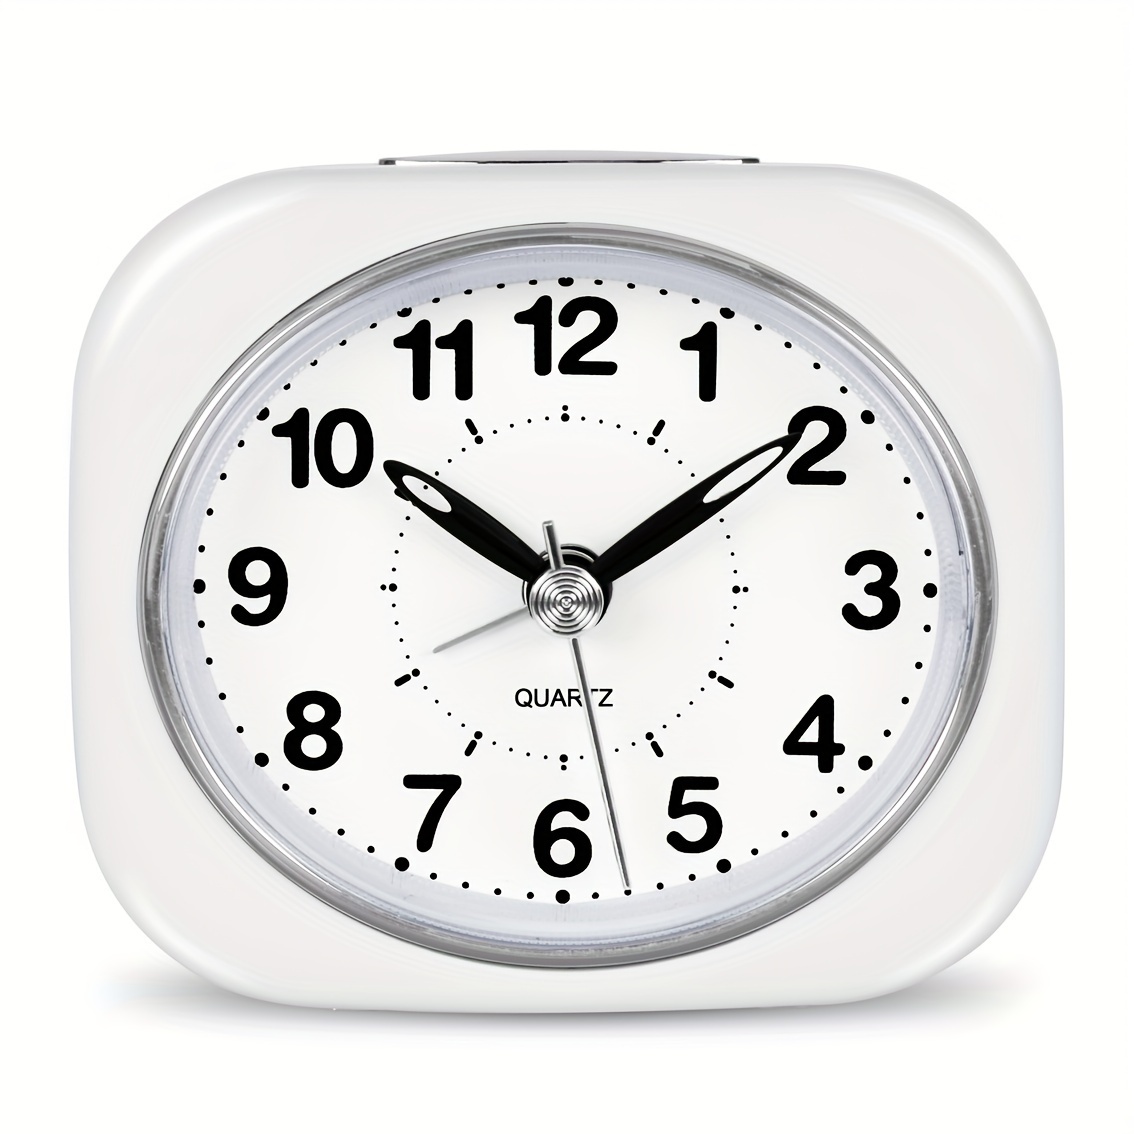 Reloj despertador analógico silencioso sin tictac, pequeño reloj